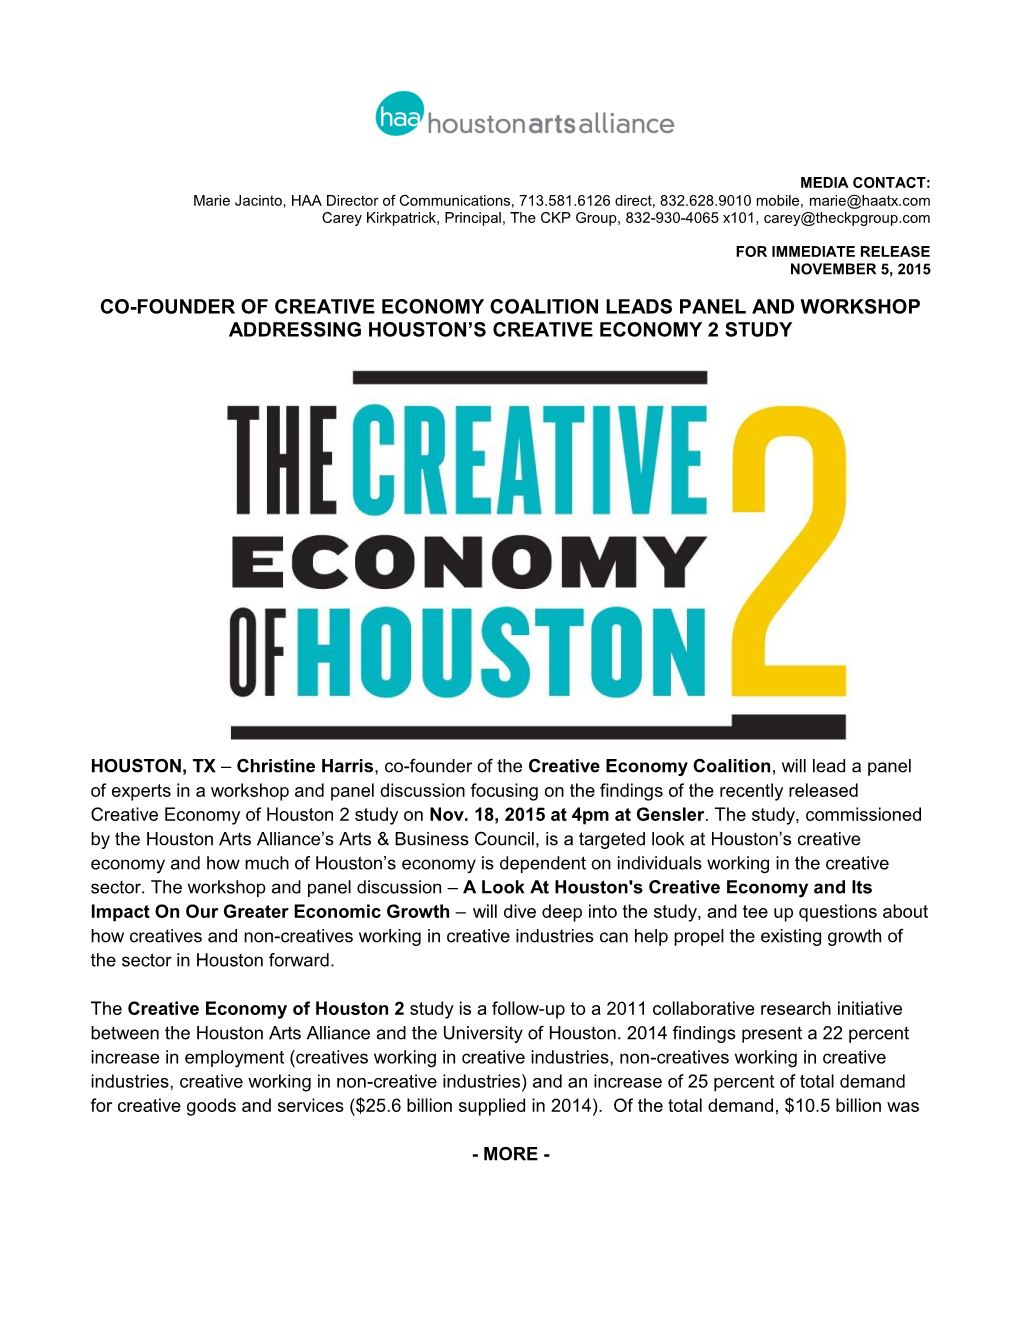 Co-Founder of Creative Economy Coalition Leads Panel and Workshop Addressing Houston’S Creative Economy 2 Study